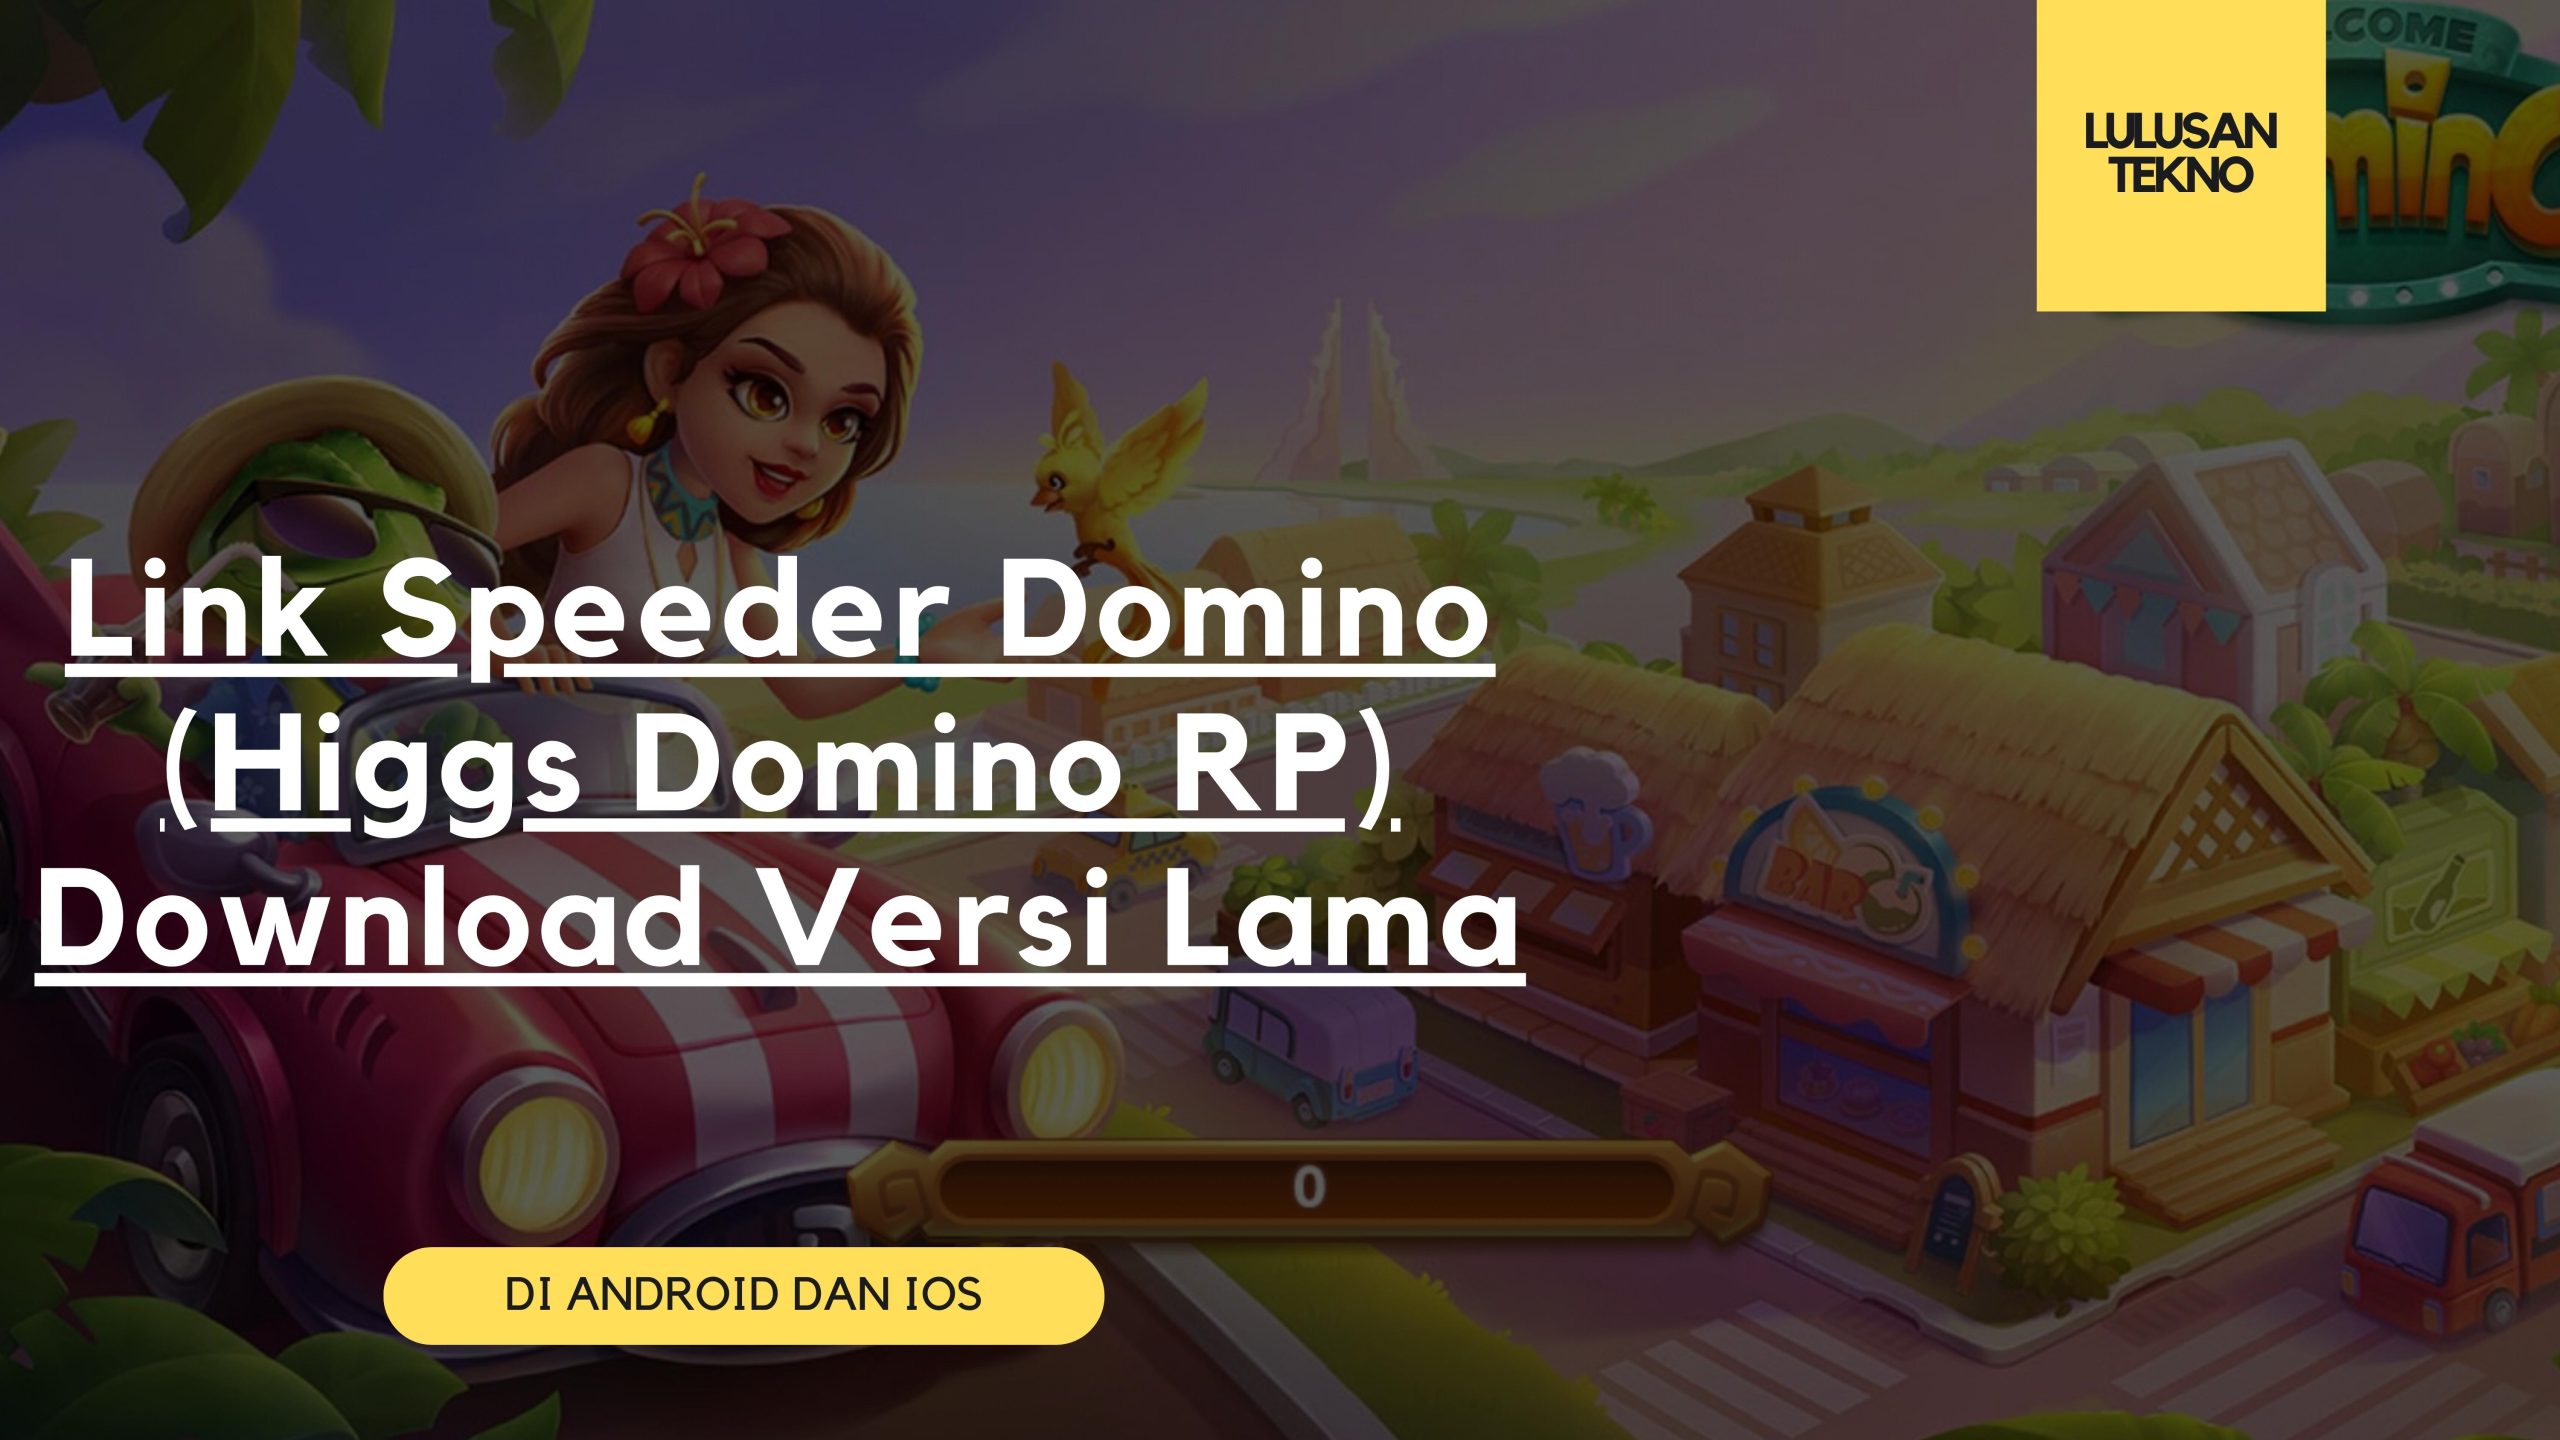 Link Speeder Domino (Higgs Domino RP) Download Versi Lama